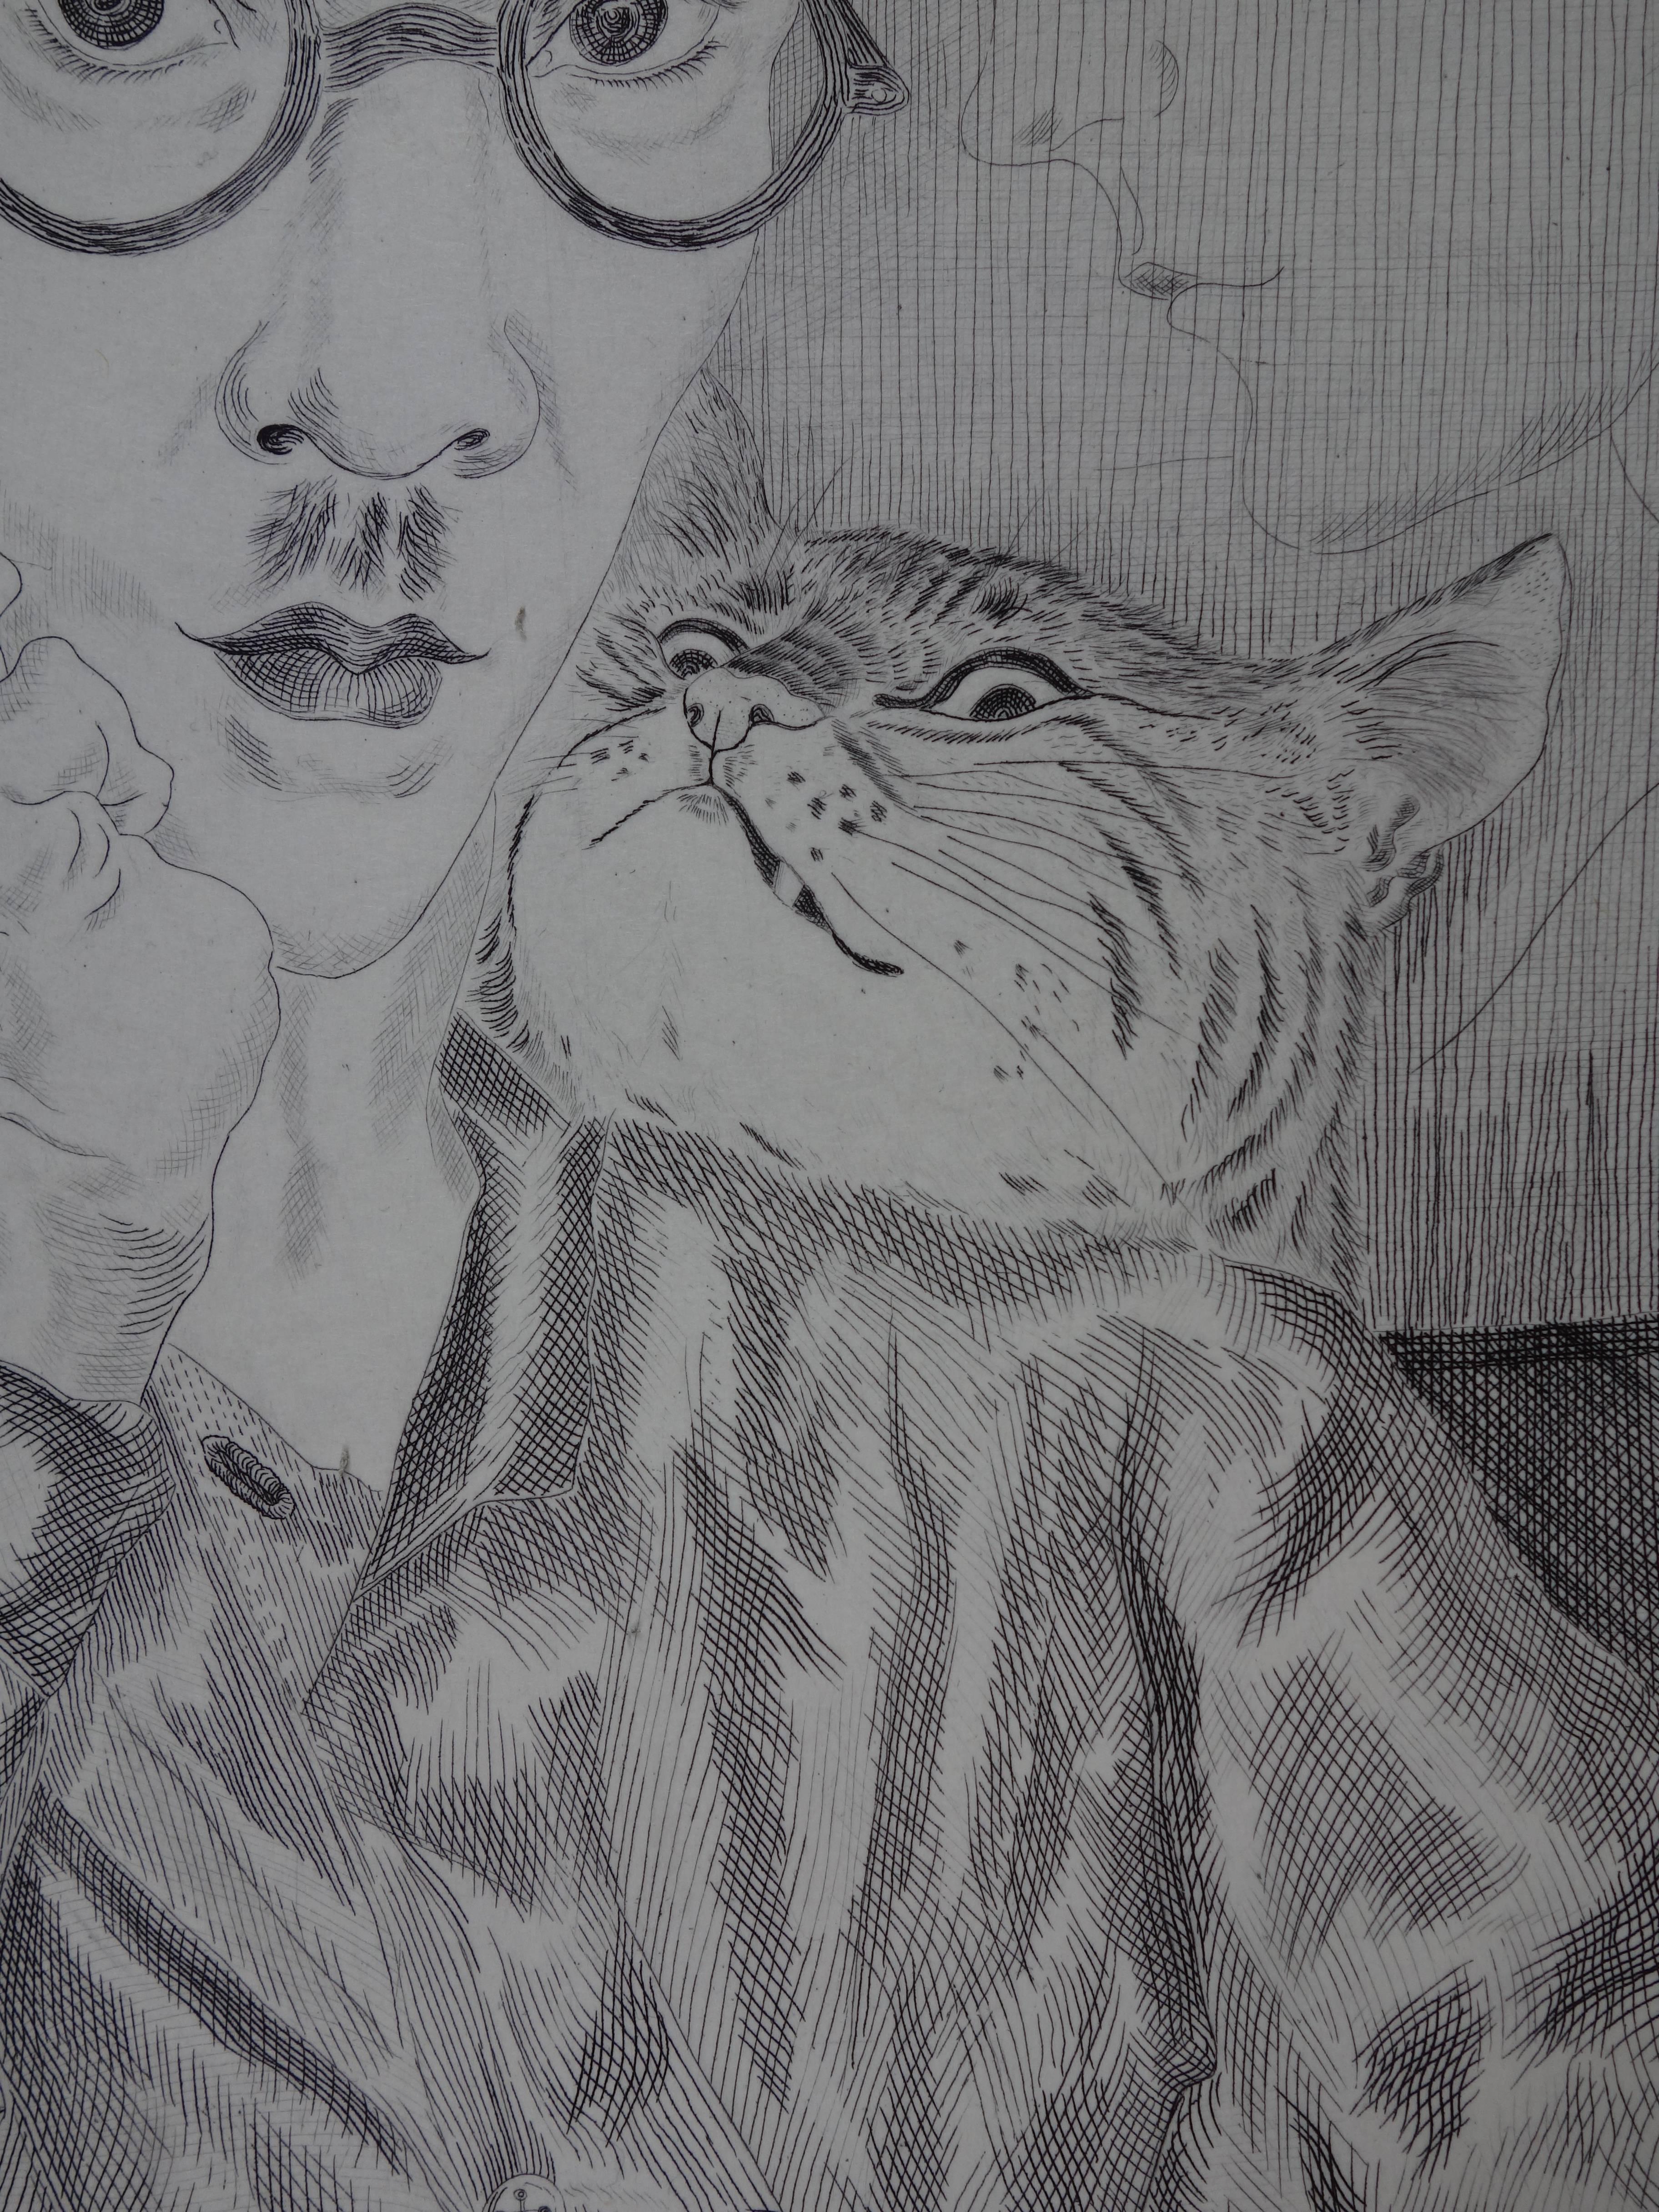 Self Portrait With a Cat - Original etching 2